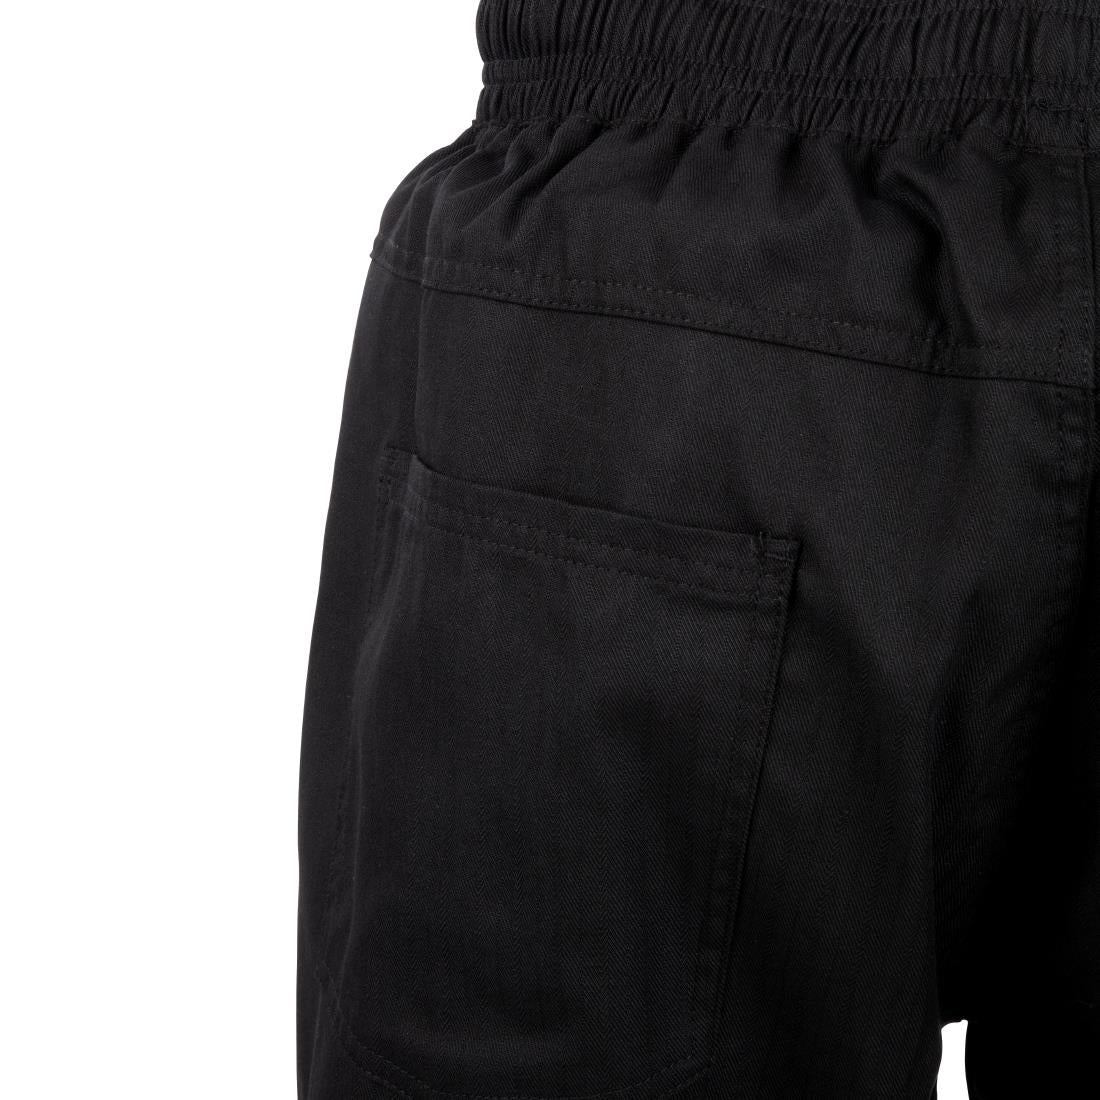 A695-L Chef Works Unisex Better Built Baggy Chefs Trousers Black L